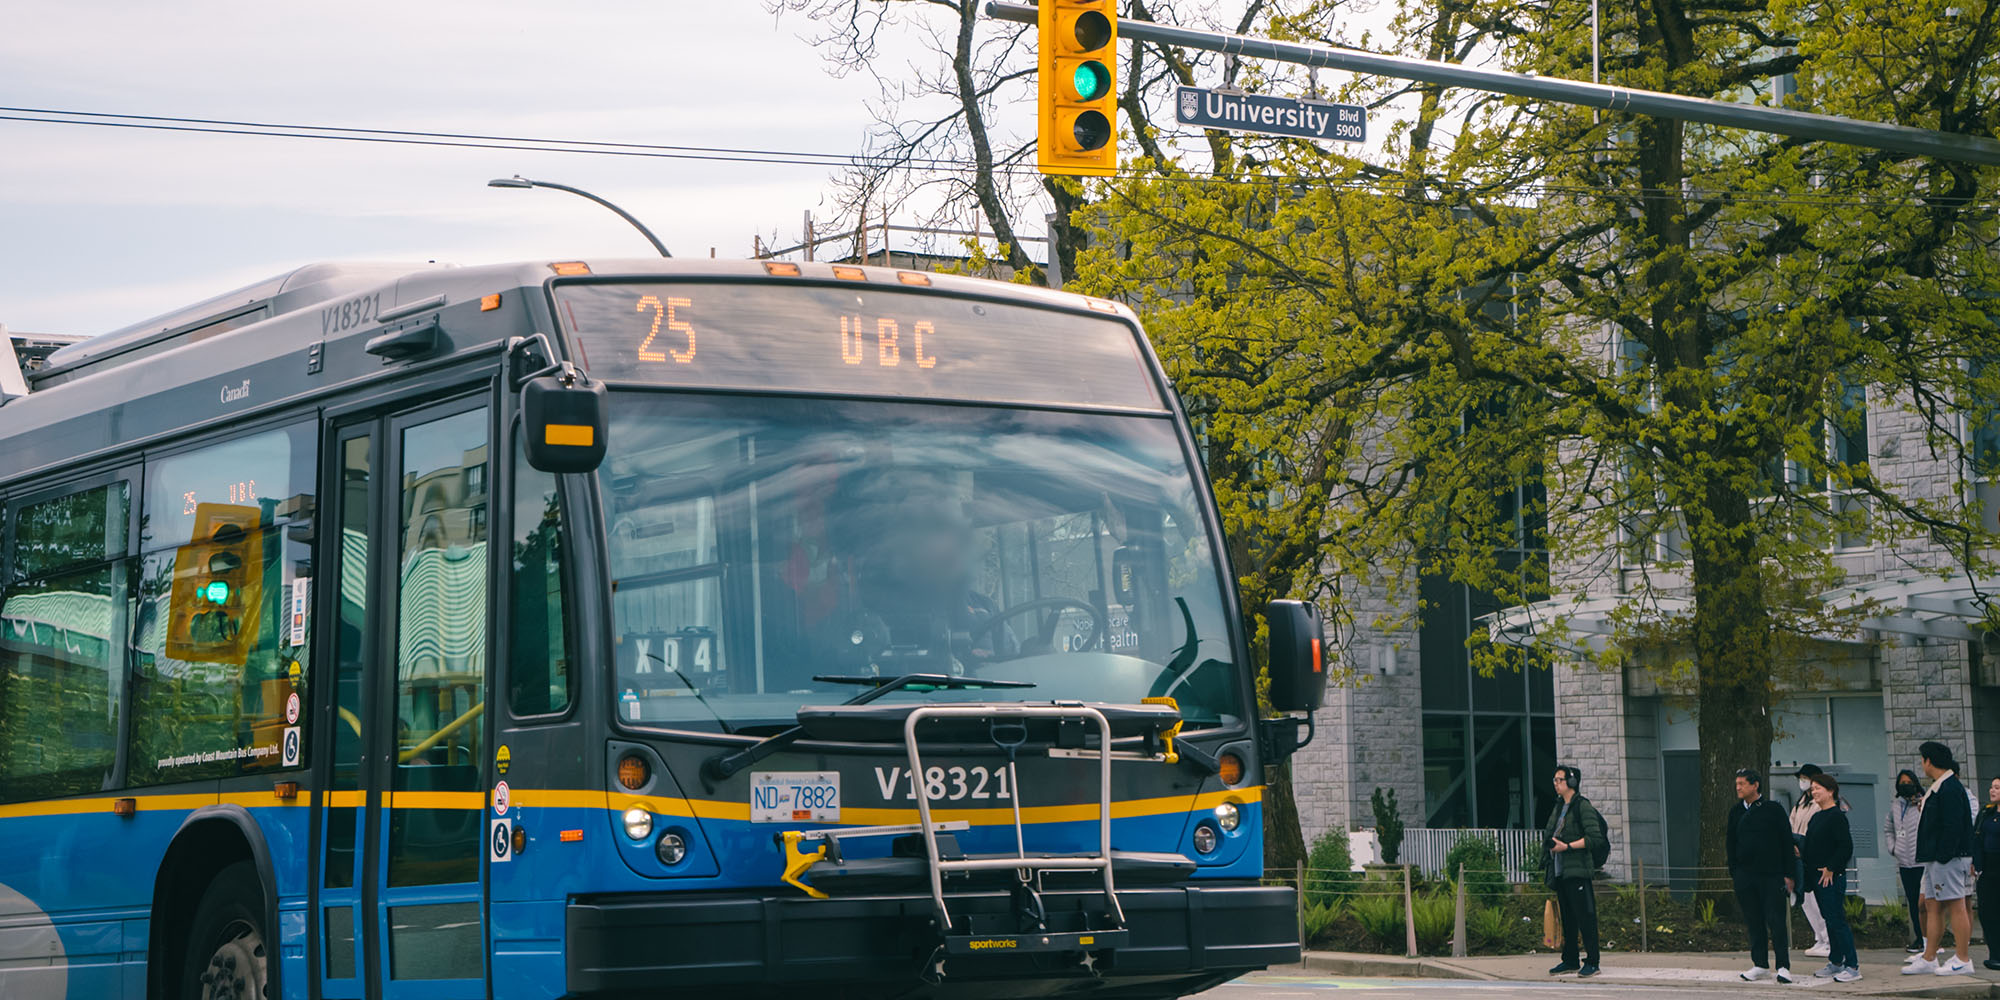 The 25 UBC bus at the University of British Columbia